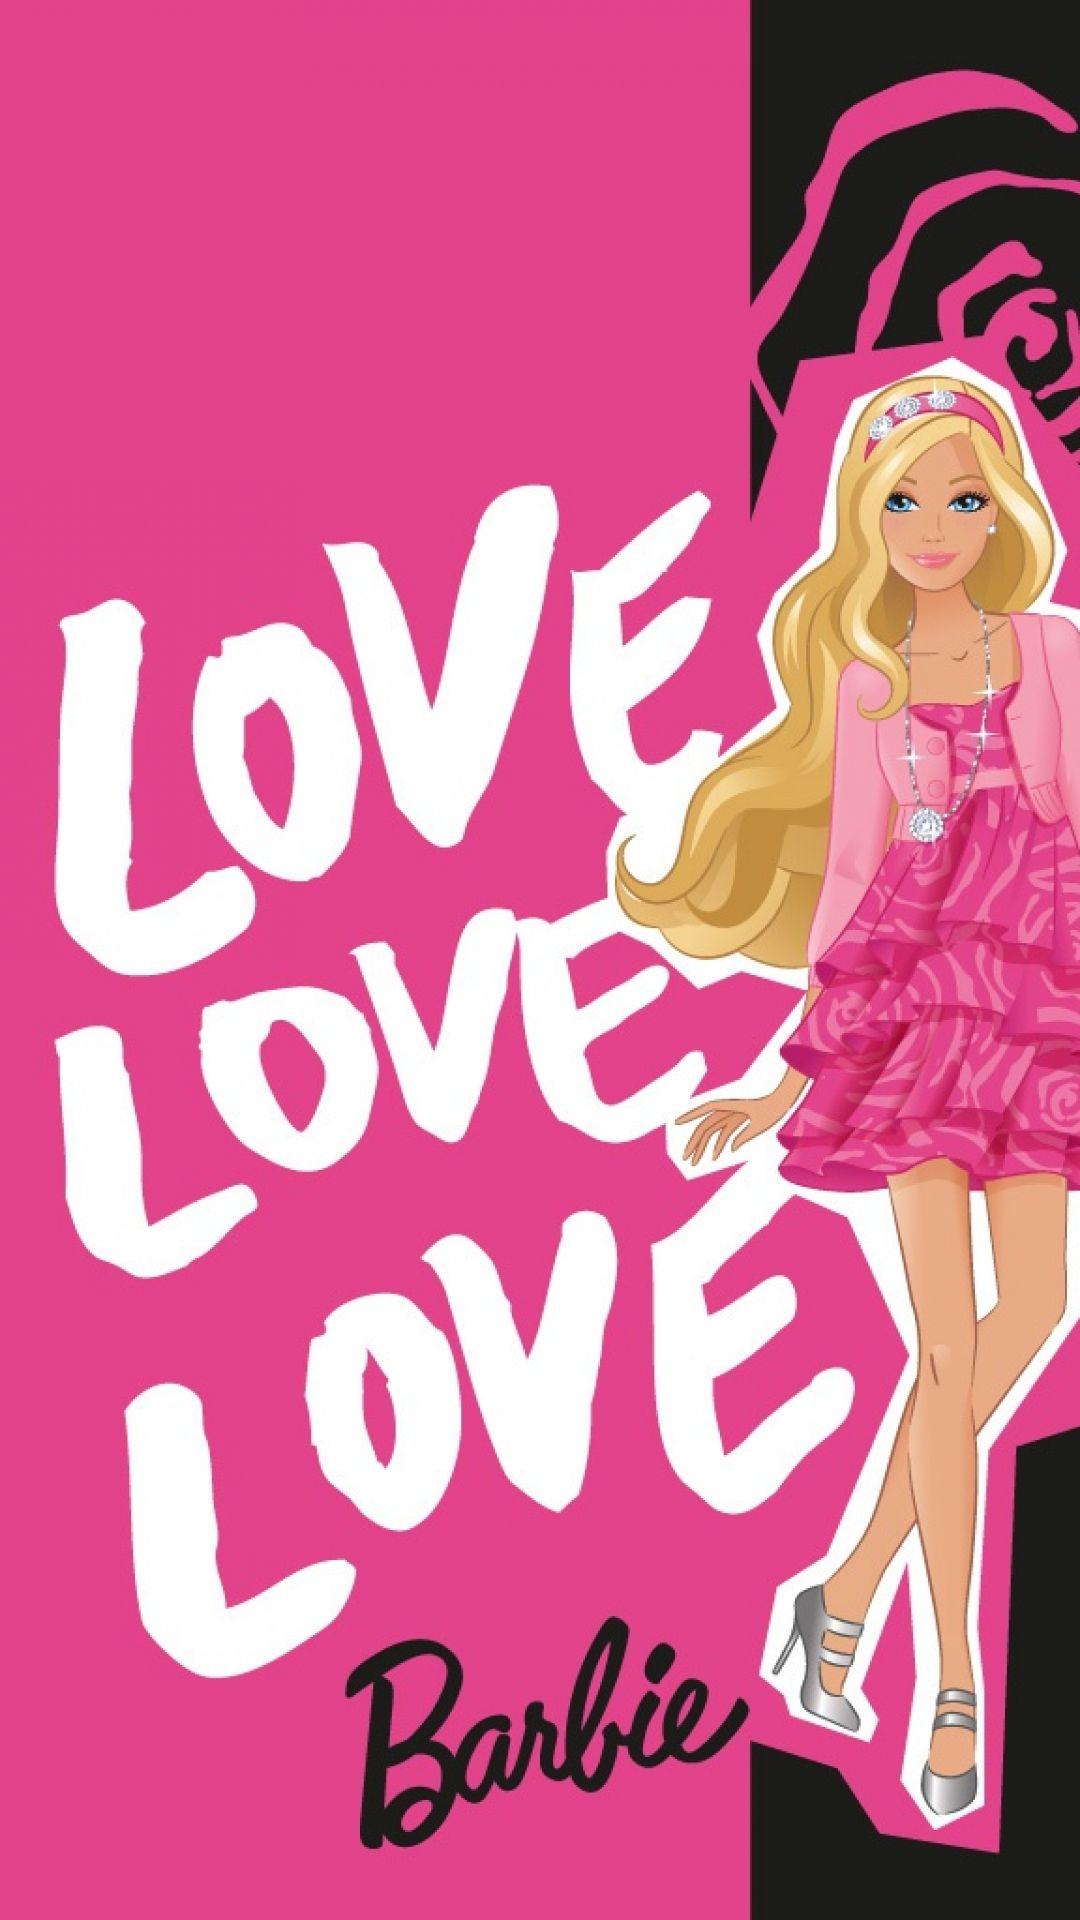 Barbie iPhone Wallpapers - Top Free Barbie iPhone ...